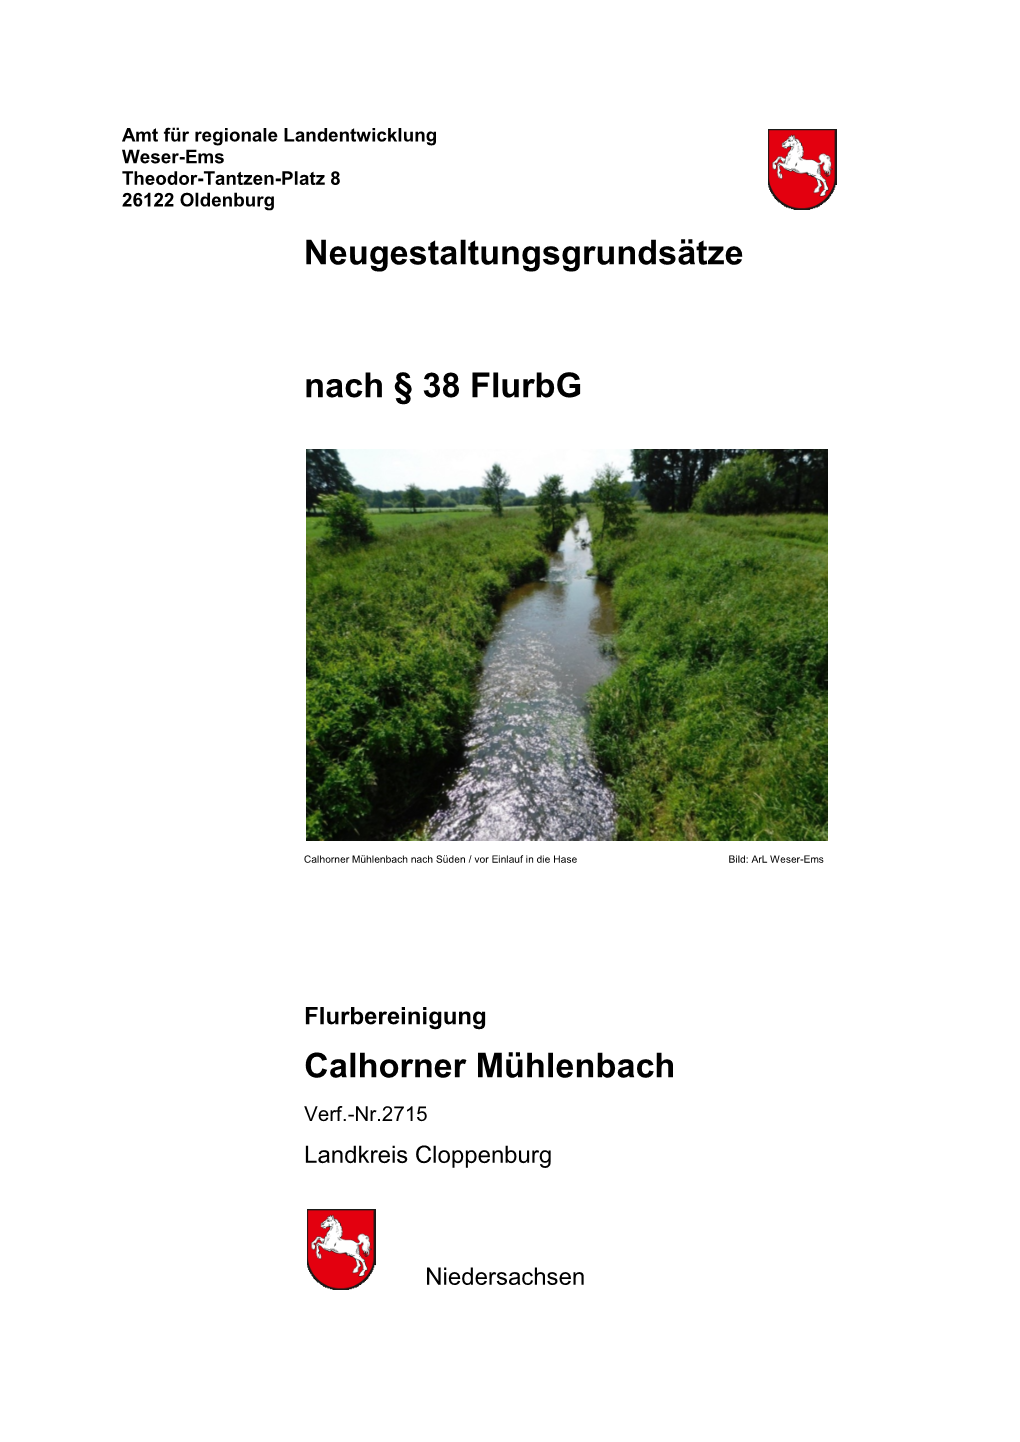 Neugestaltungsgrundsätze Nach § 38 Flurbg Calhorner Mühlenbach